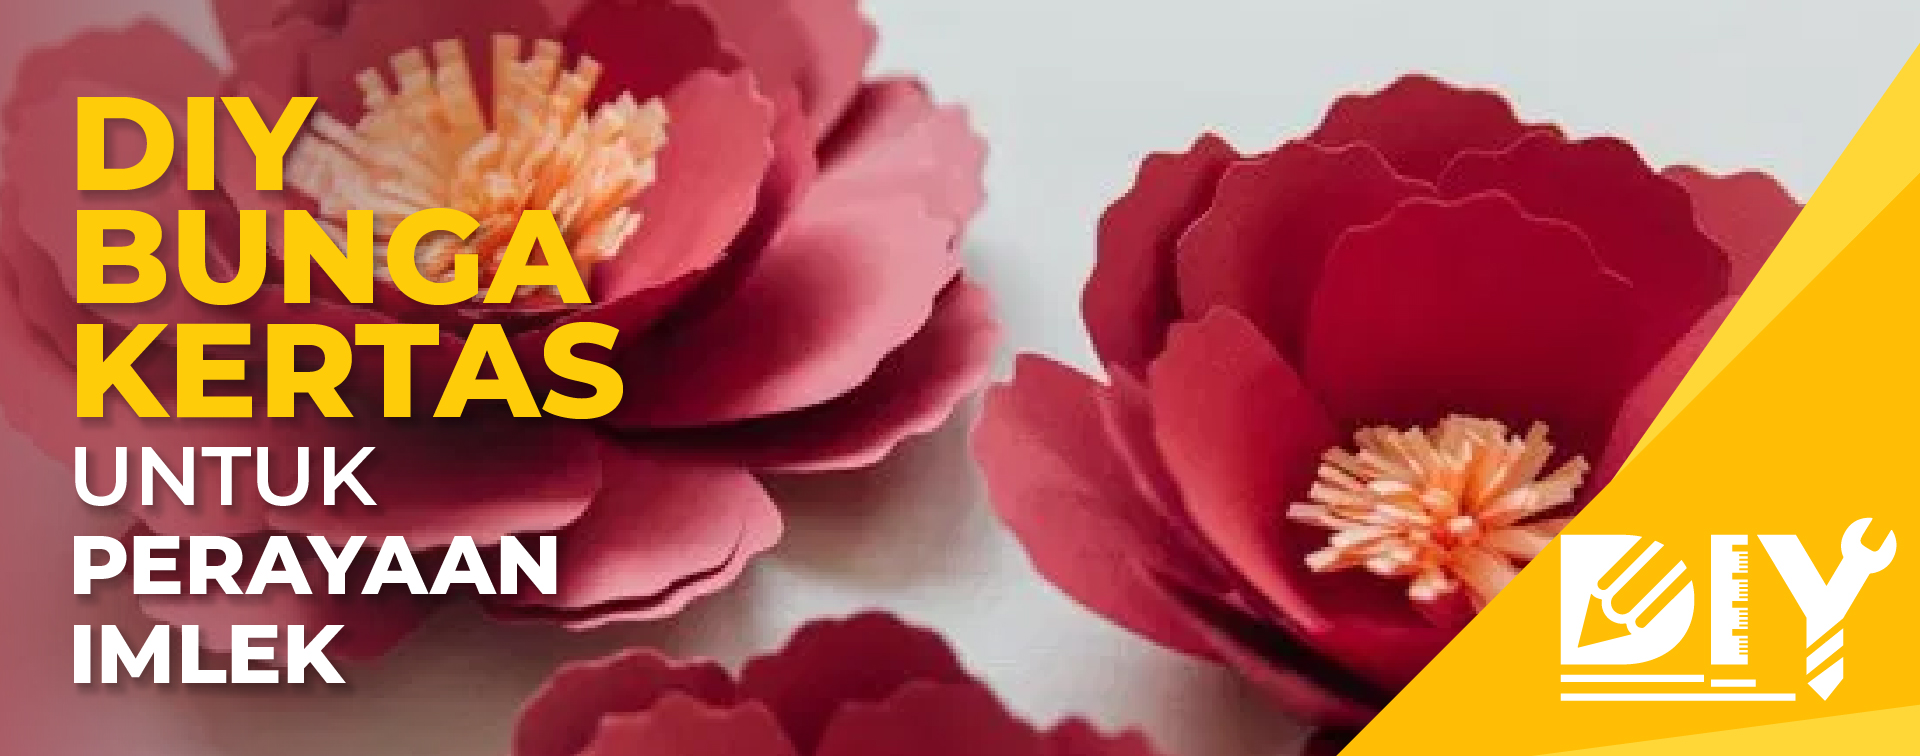 DIY Bunga Kertas Untuk Perayaan Imlek